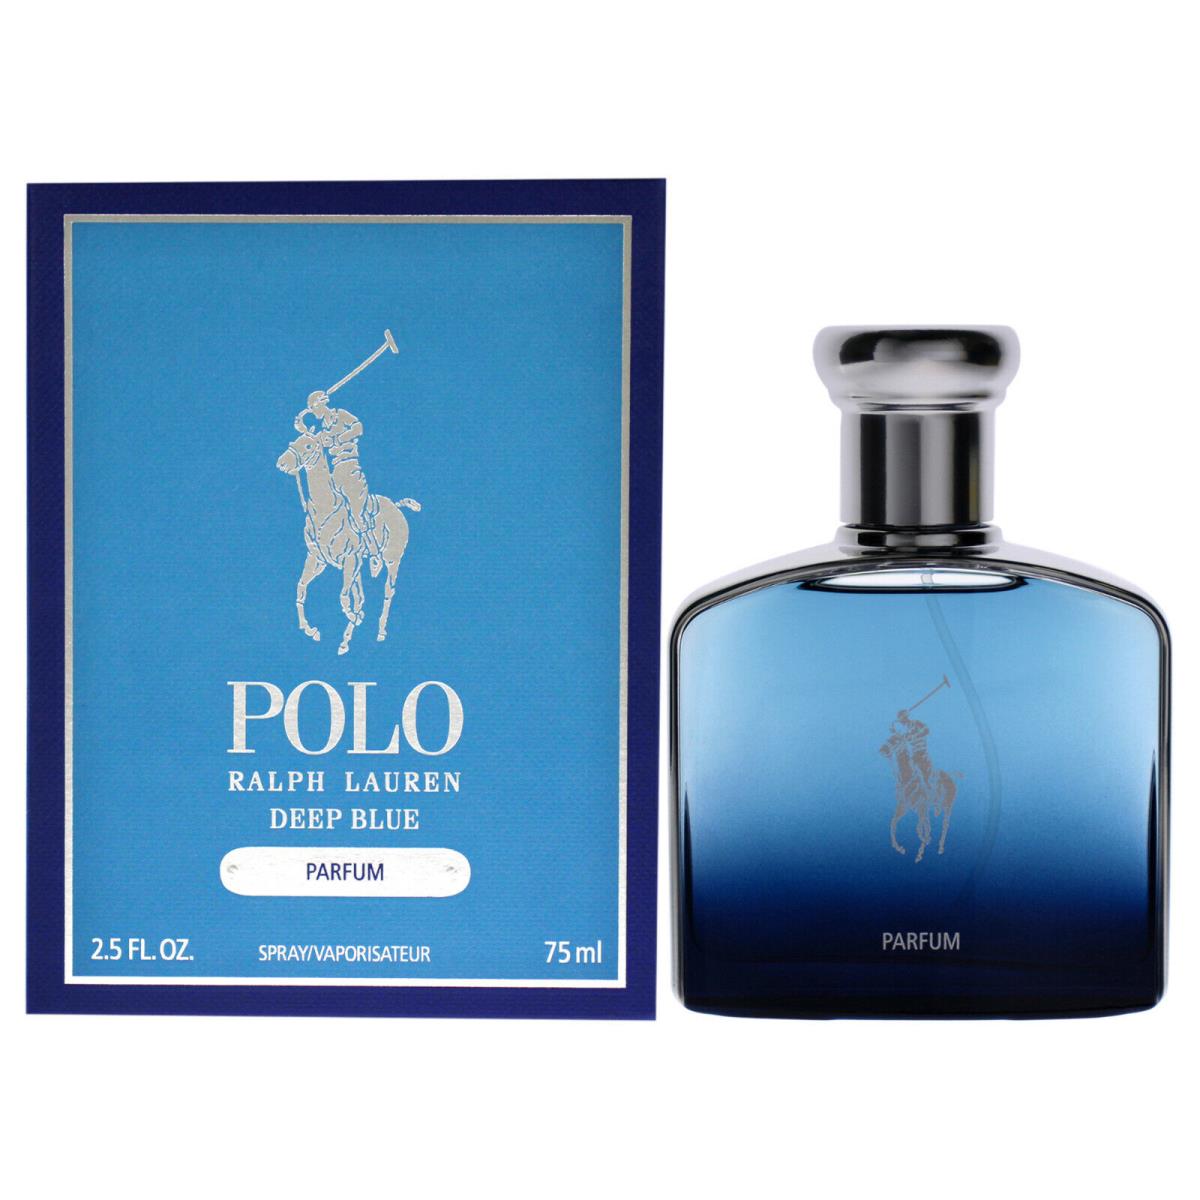 Polo Deep Blue by Ralph Lauren For Men - 2.5 oz Parfum Spray